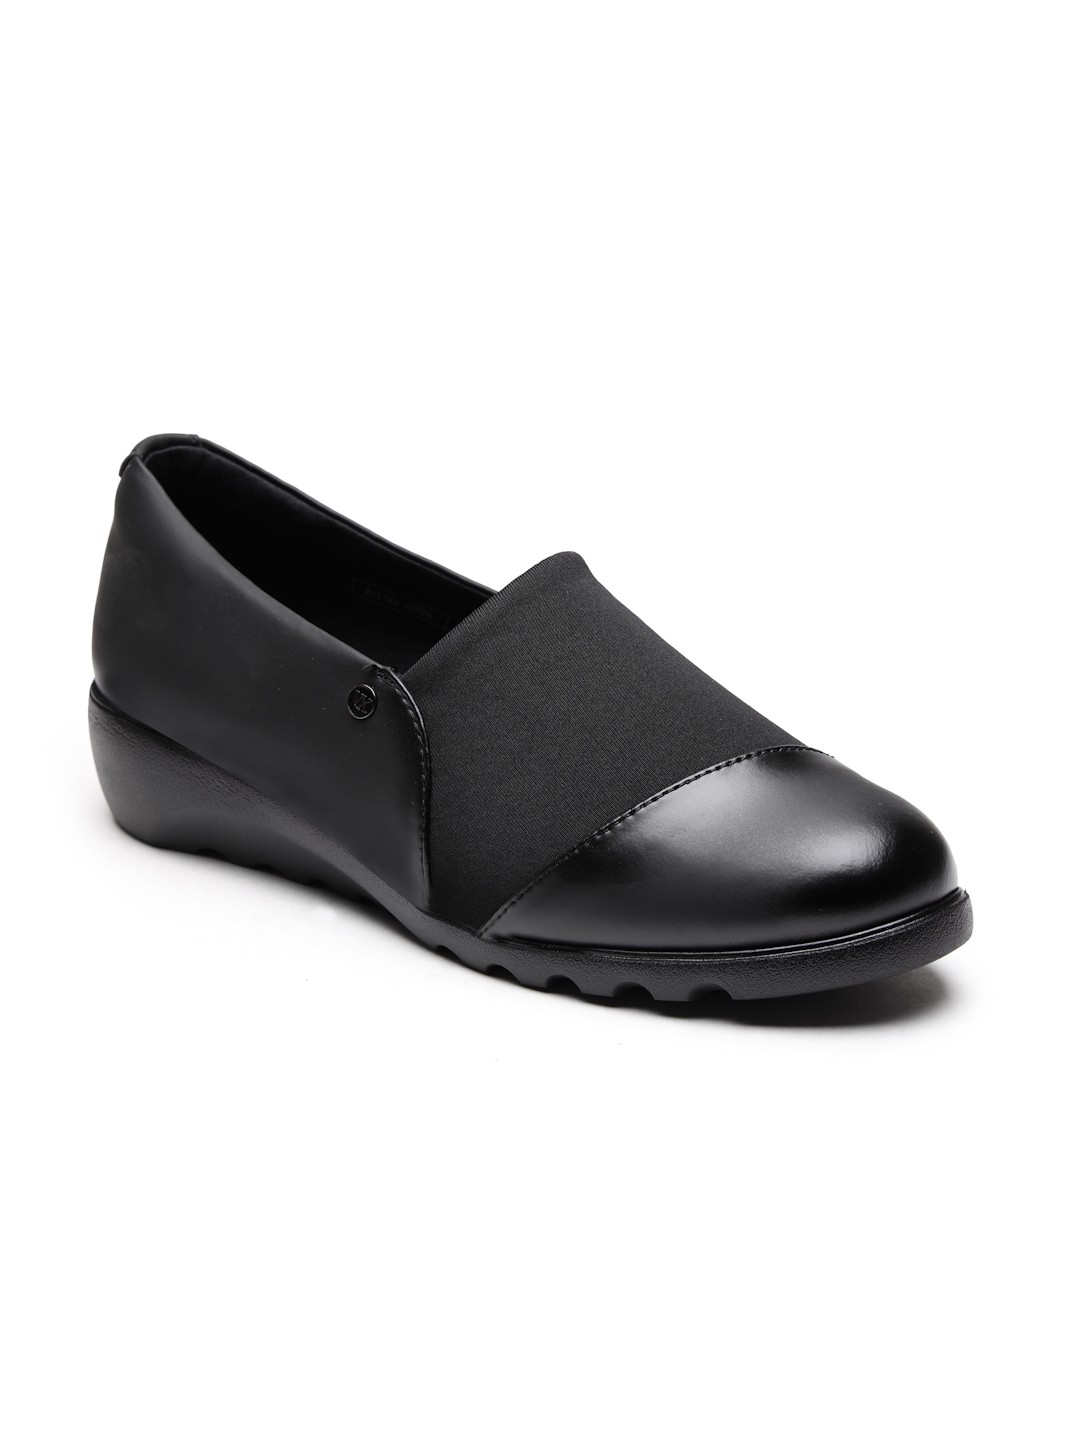 Buy Von Wellx Germany Comfort Women's Black Casual Shoes Ayla Online in Maharashtra